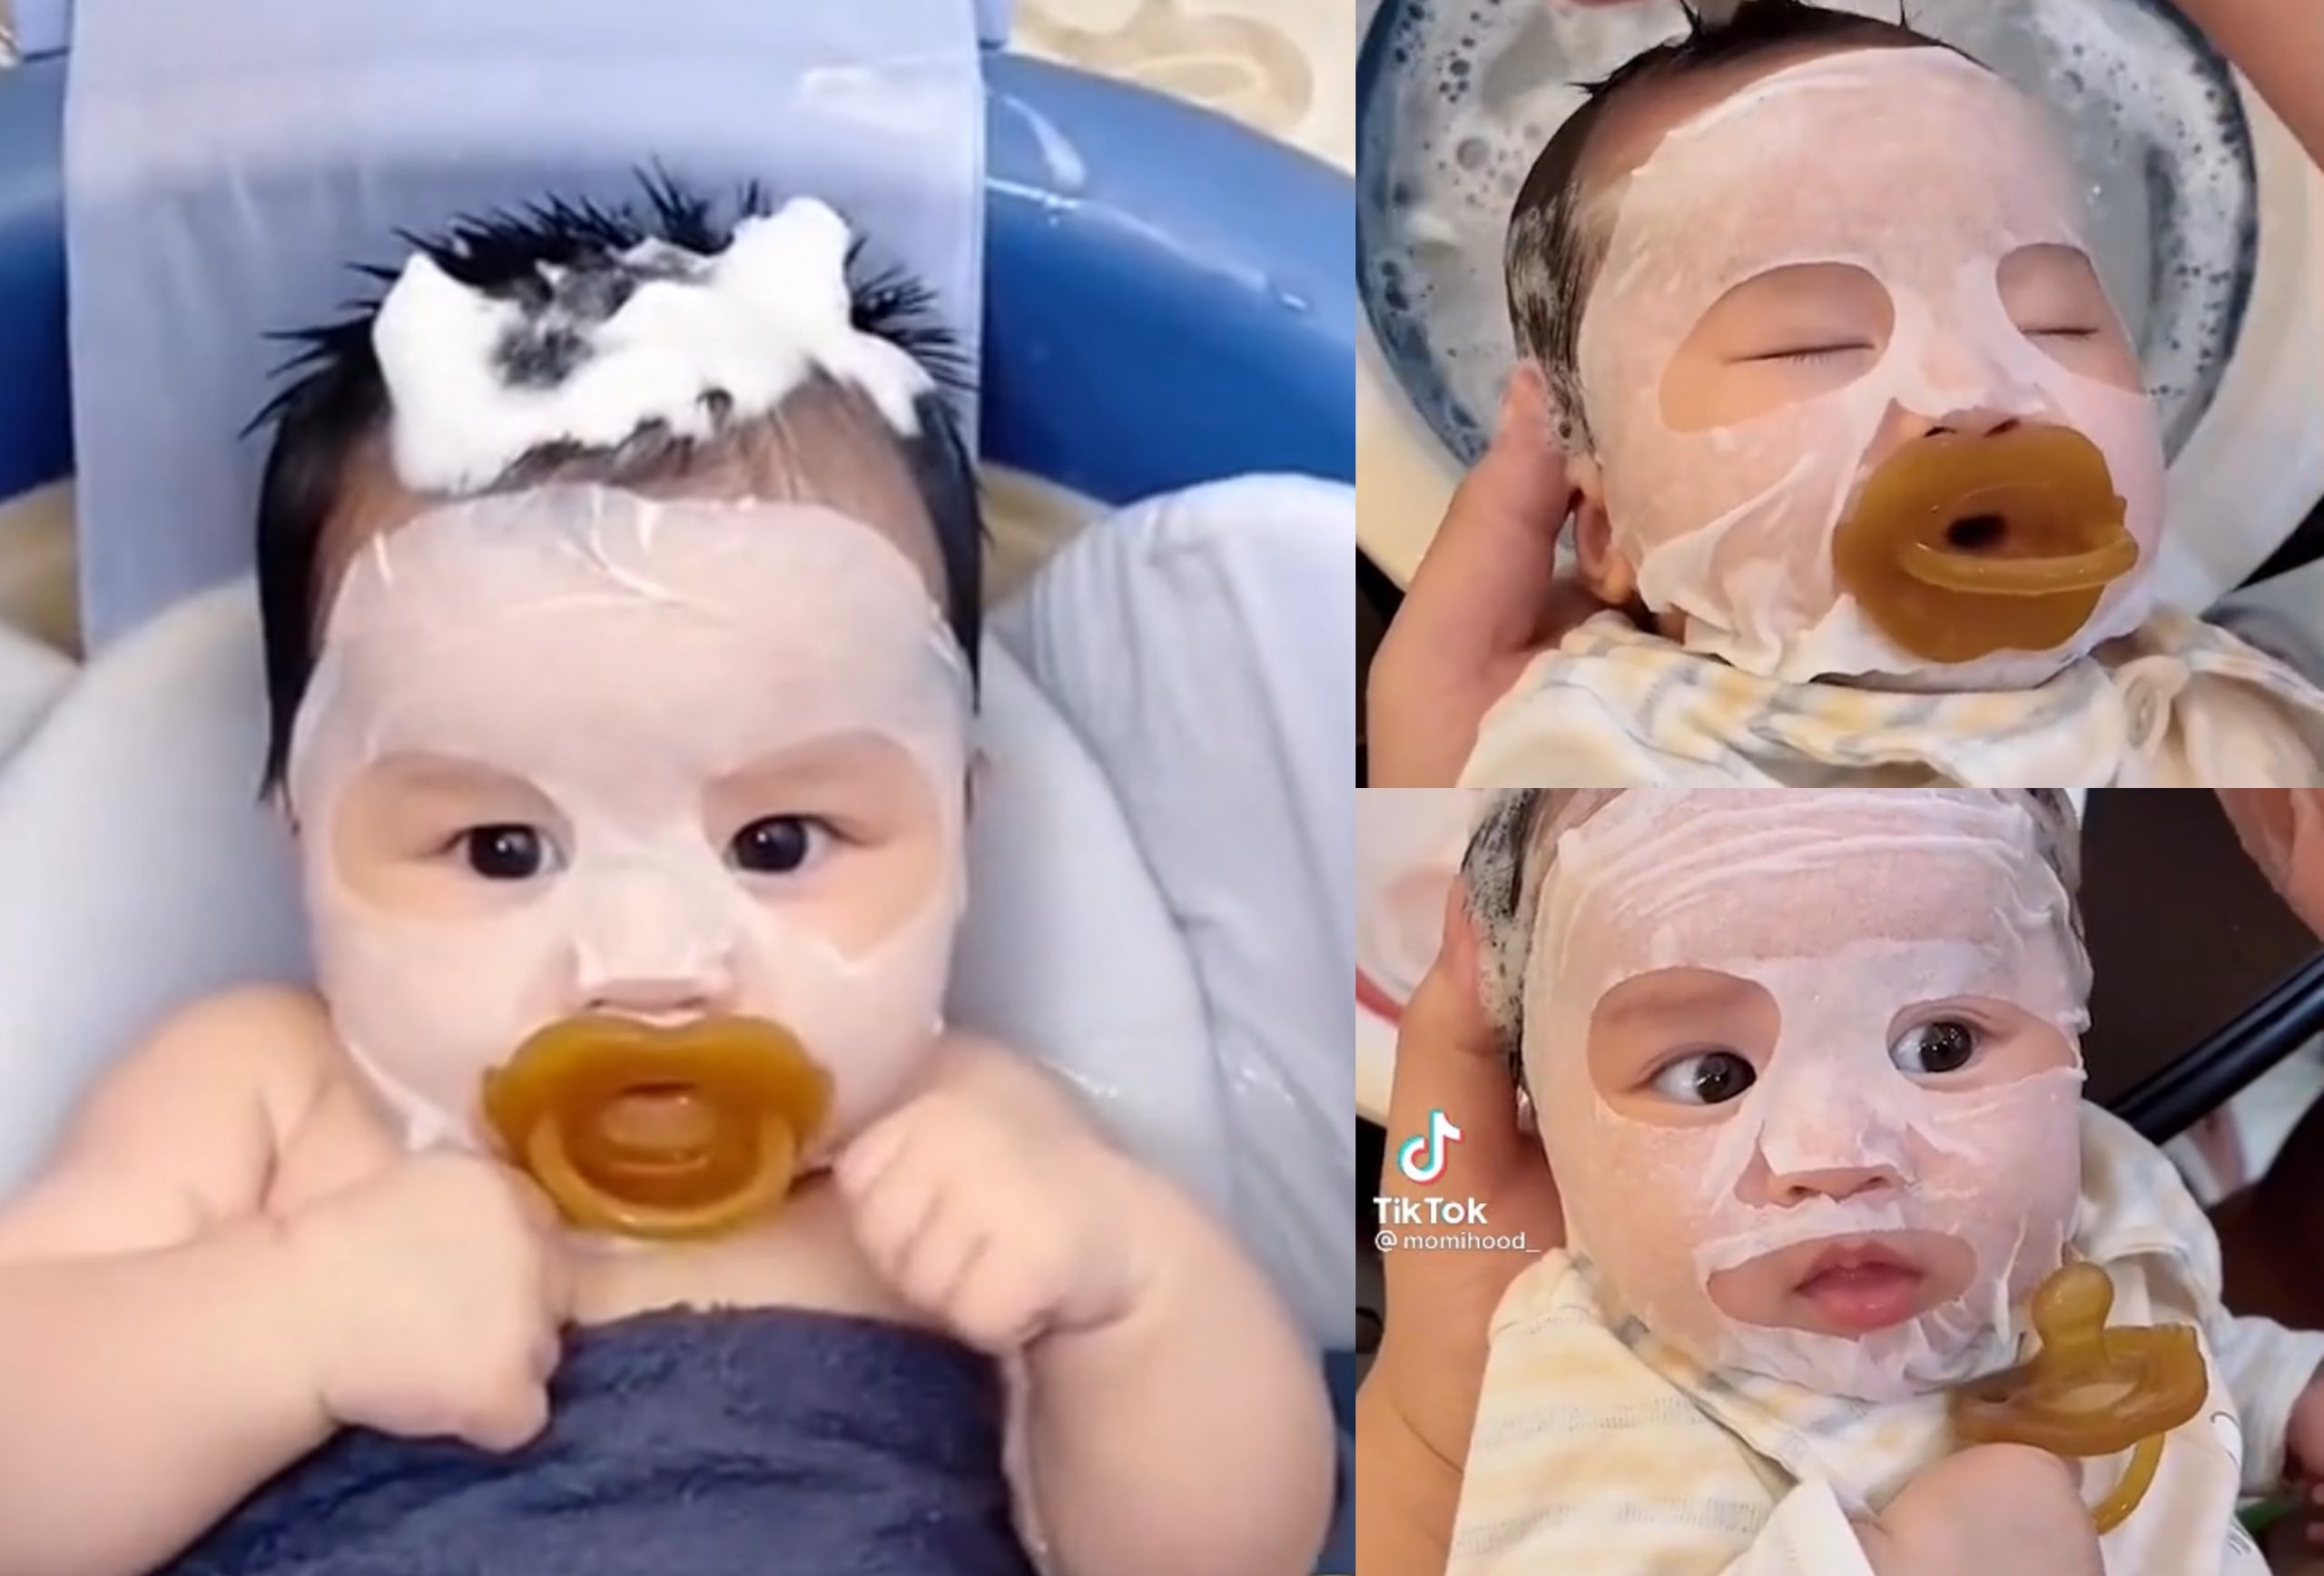 Ditonton Lebih 700 Ribu Kali, Viral Video Wanita Buat Rawatan Spa Pada Bayi – ‘Biar Cantik Sejak Kecil’